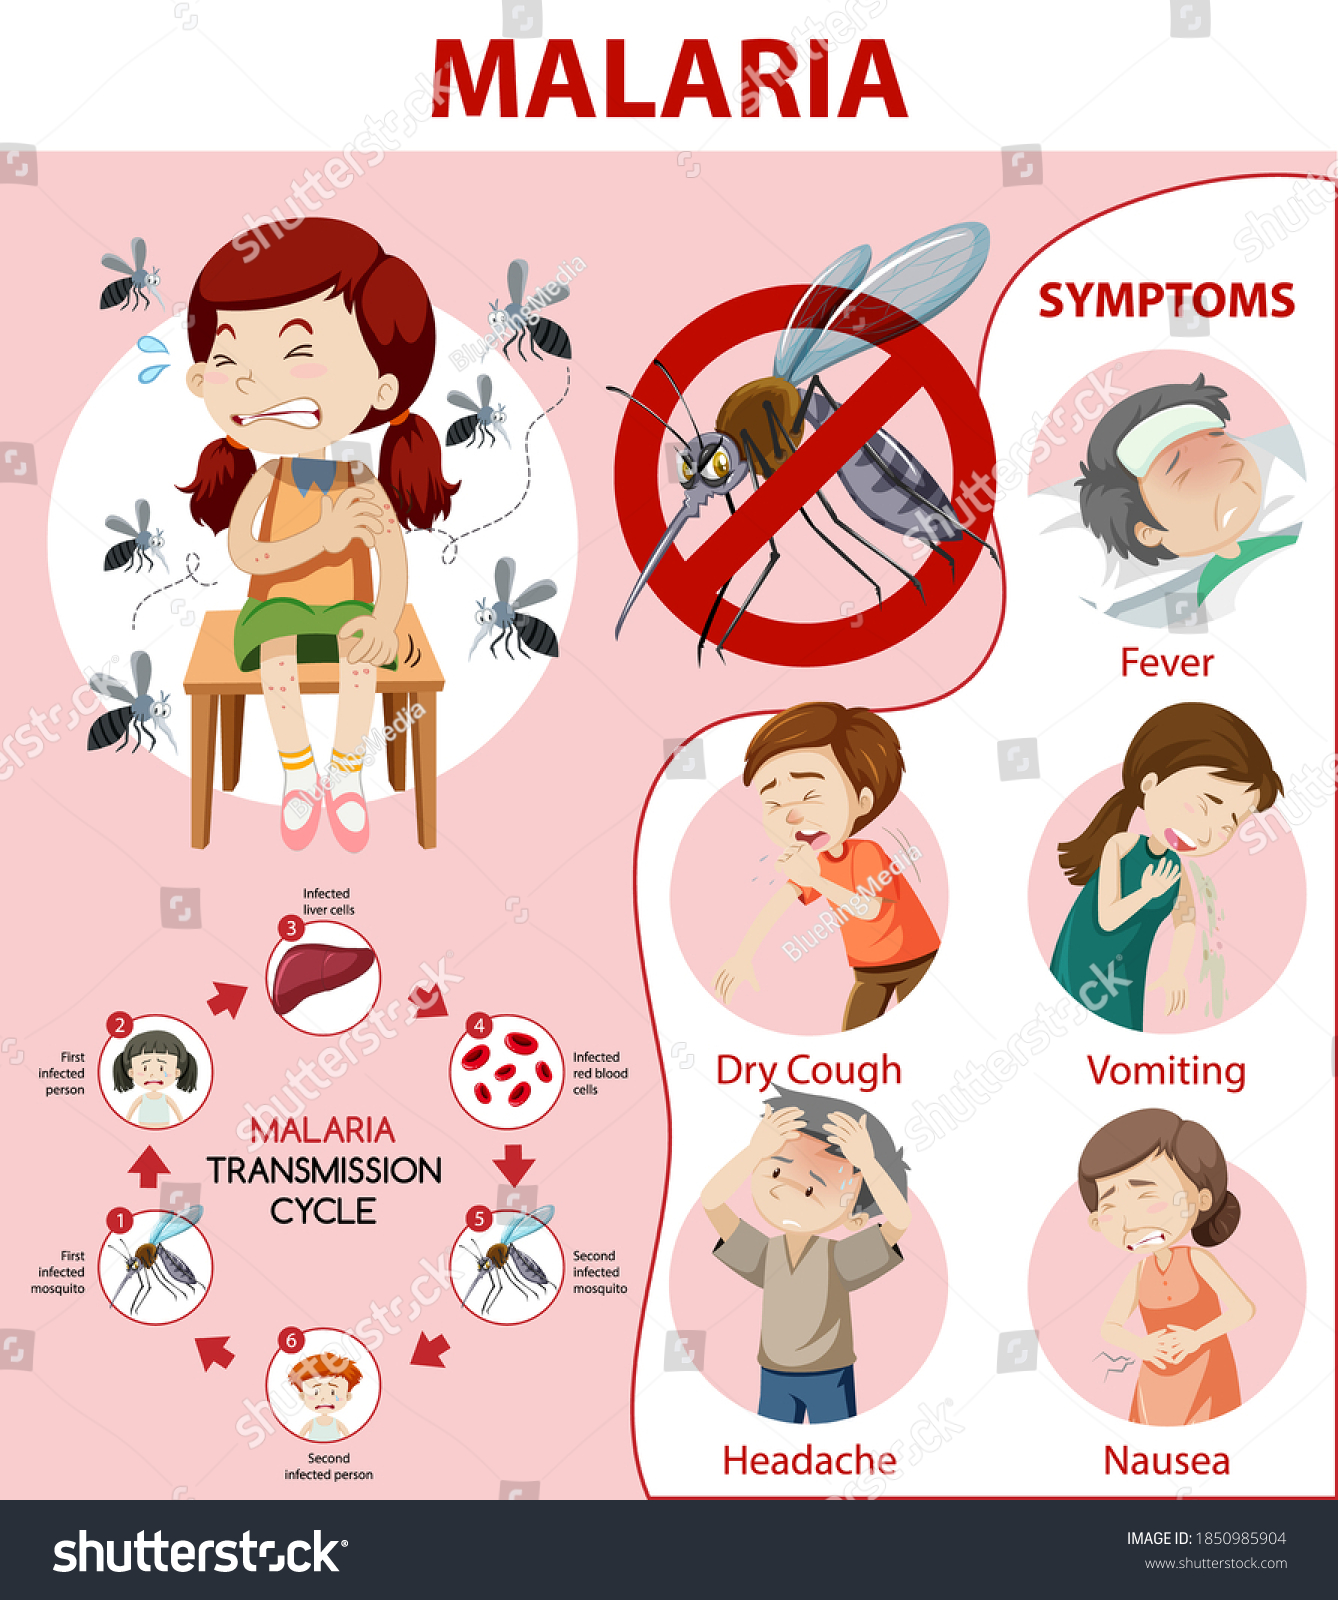 Malaria Symptom Information Infographic Illustration เวกเตอร์สต็อก